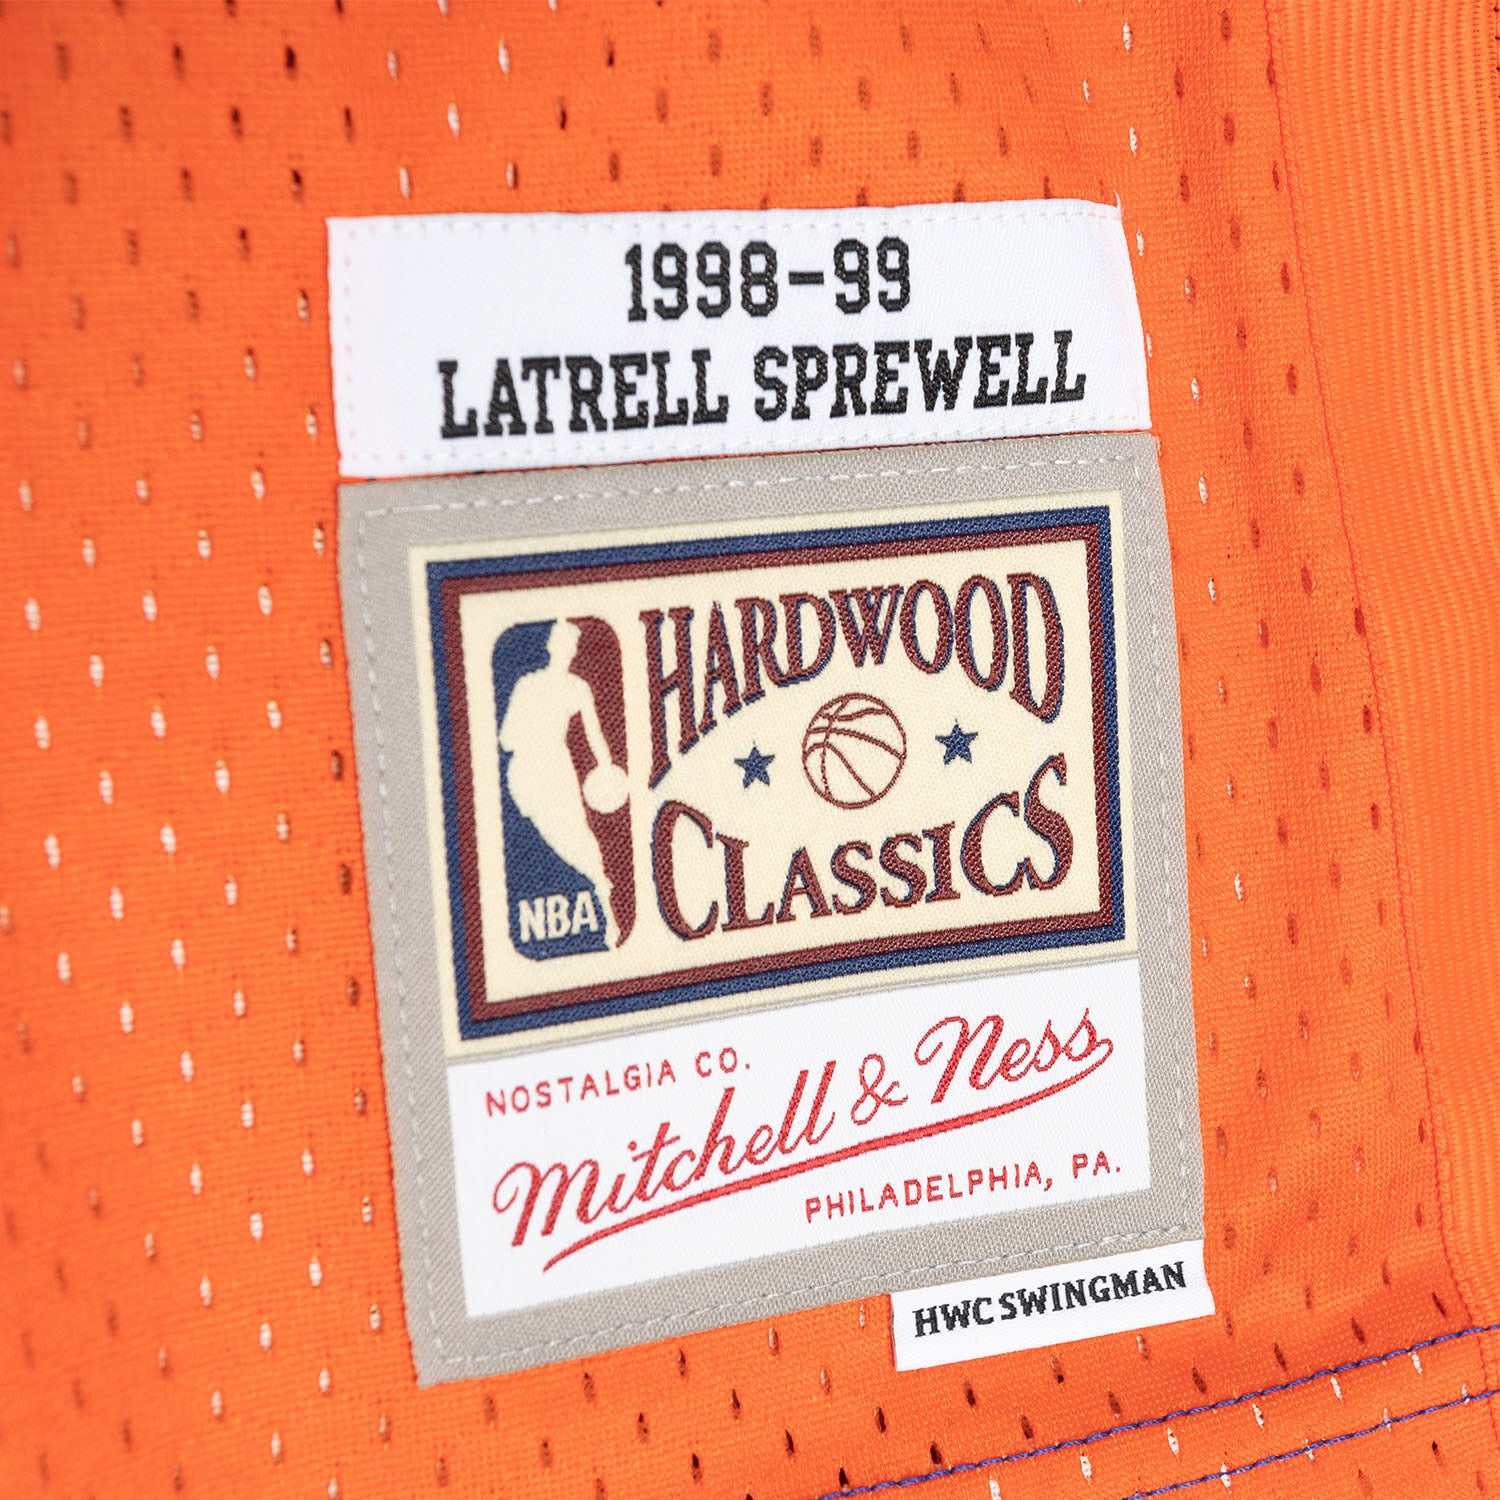 Swingman Jersey New York Knicks Road 1998-99 Latrell Sprewell